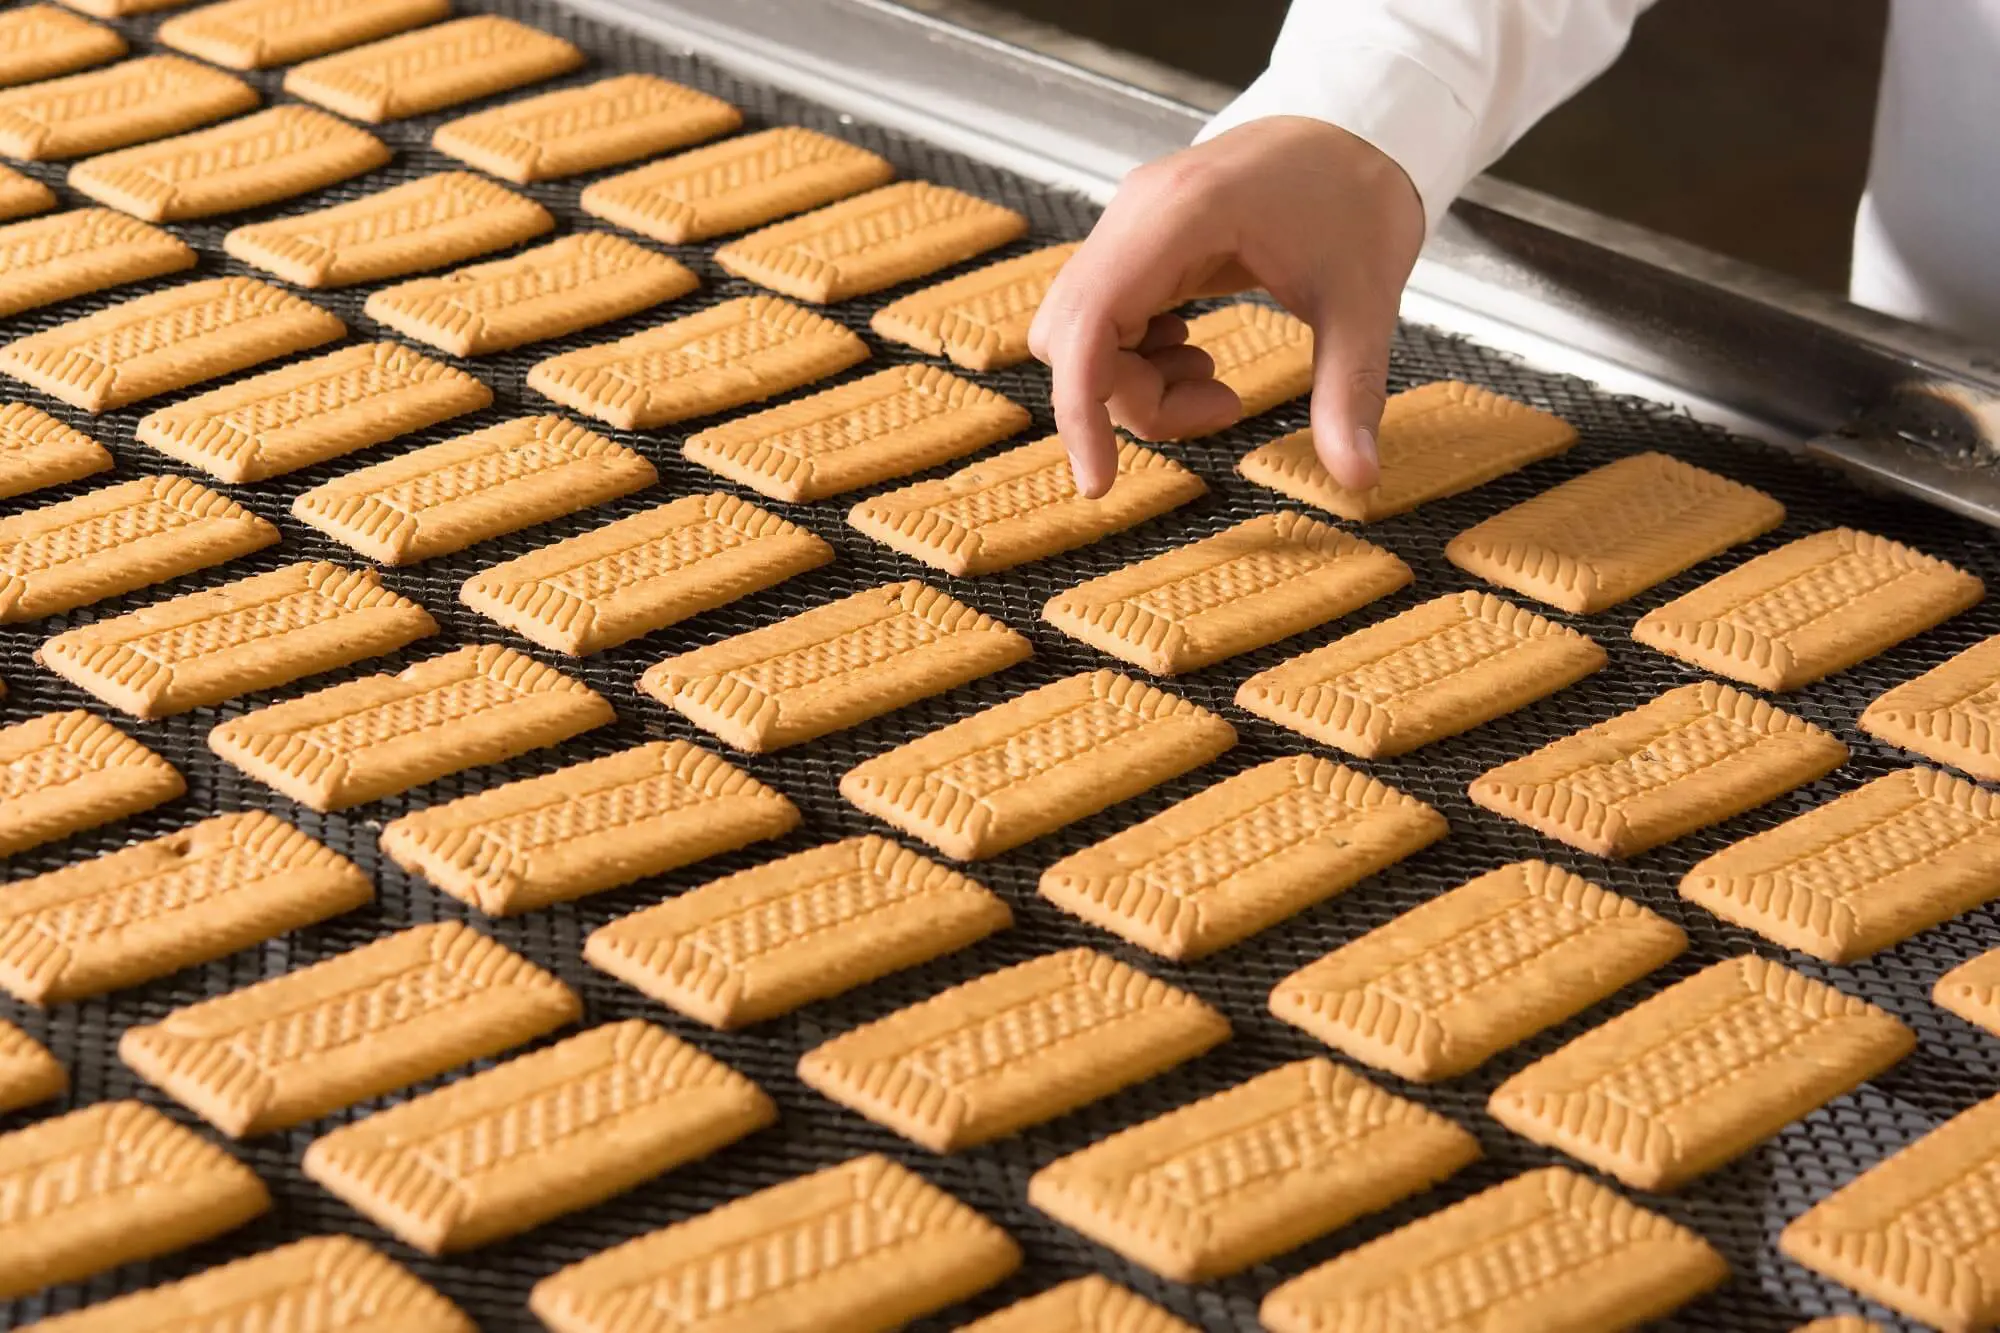 Normandy Biscuit Factory